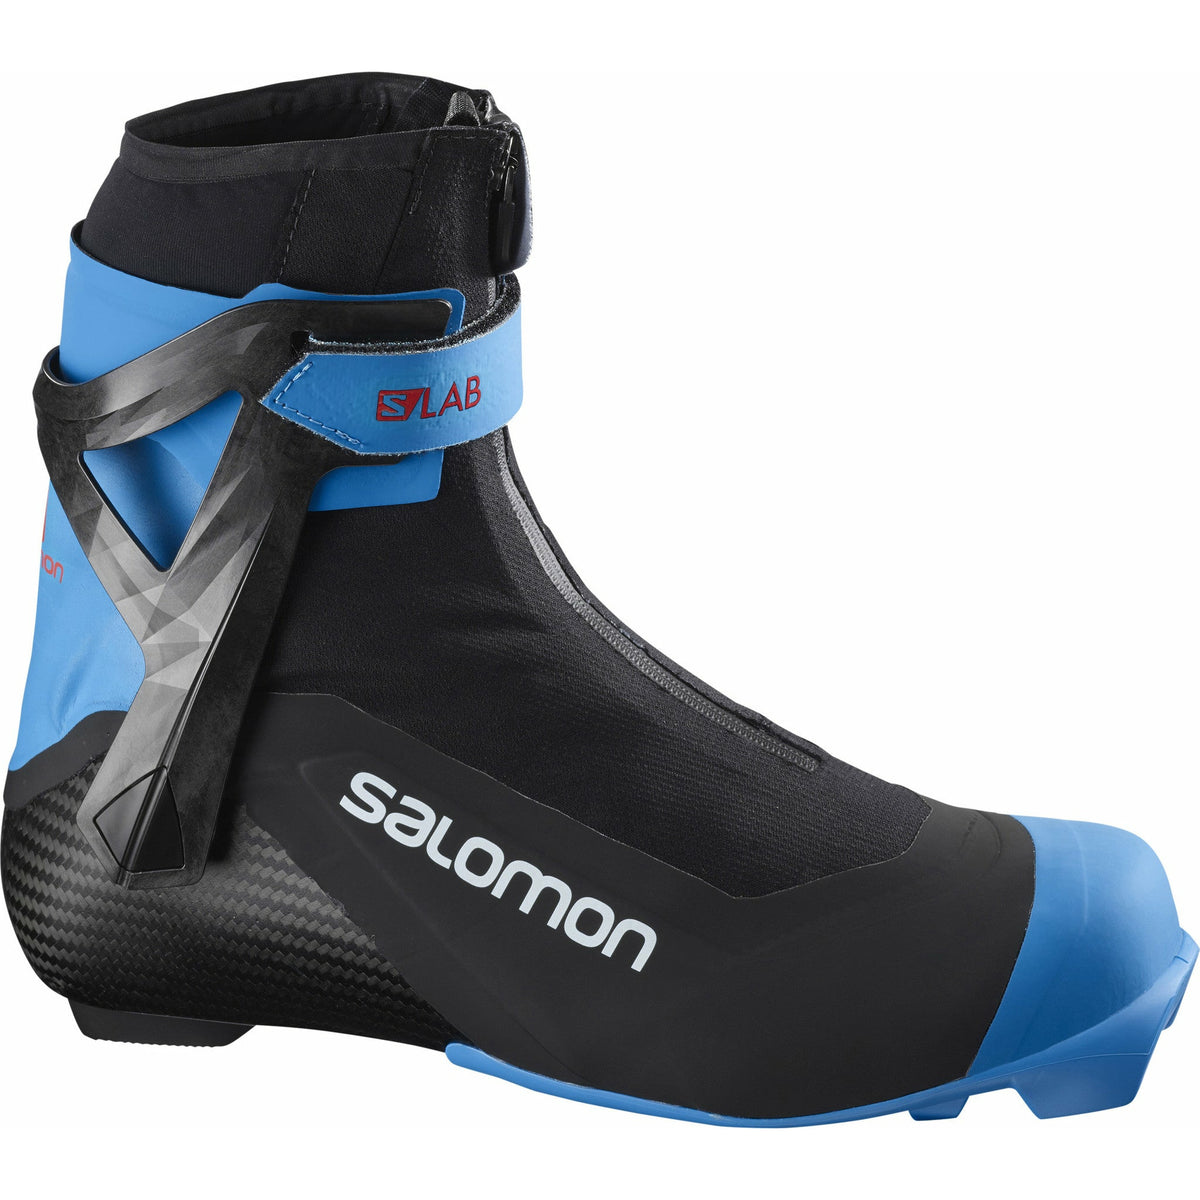 Salomon Carbon Skate Prolink